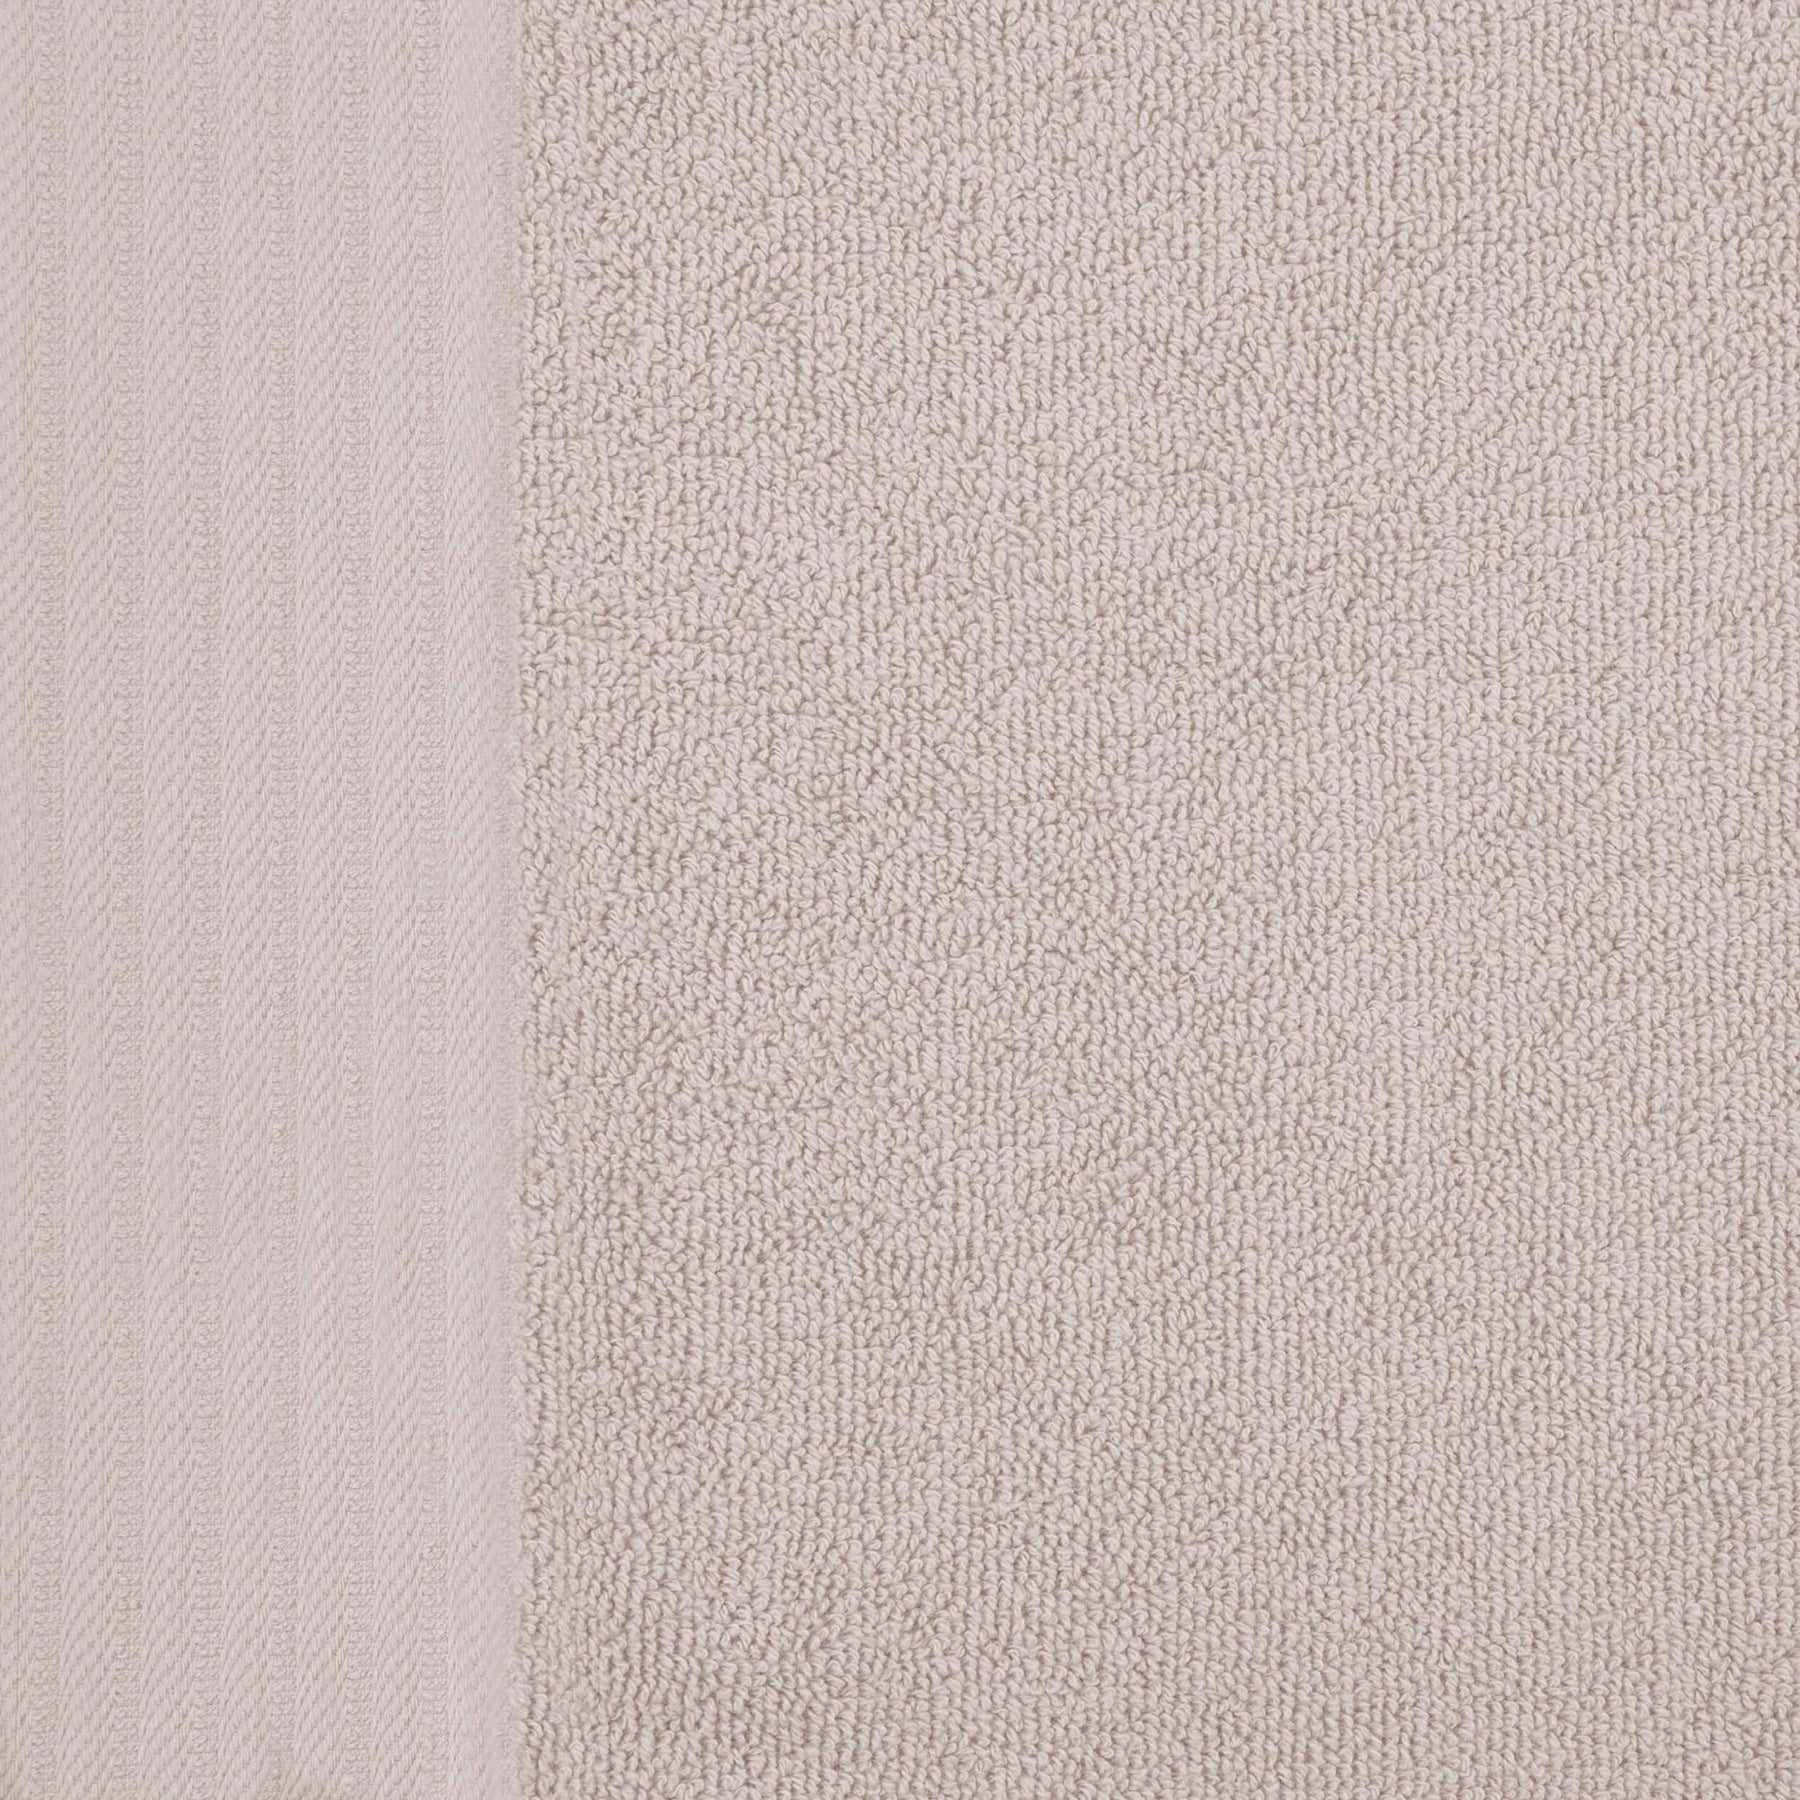 Premium Turkish Cotton Jacquard Herringbone and Solid 8-Piece Towel Set - Ivory